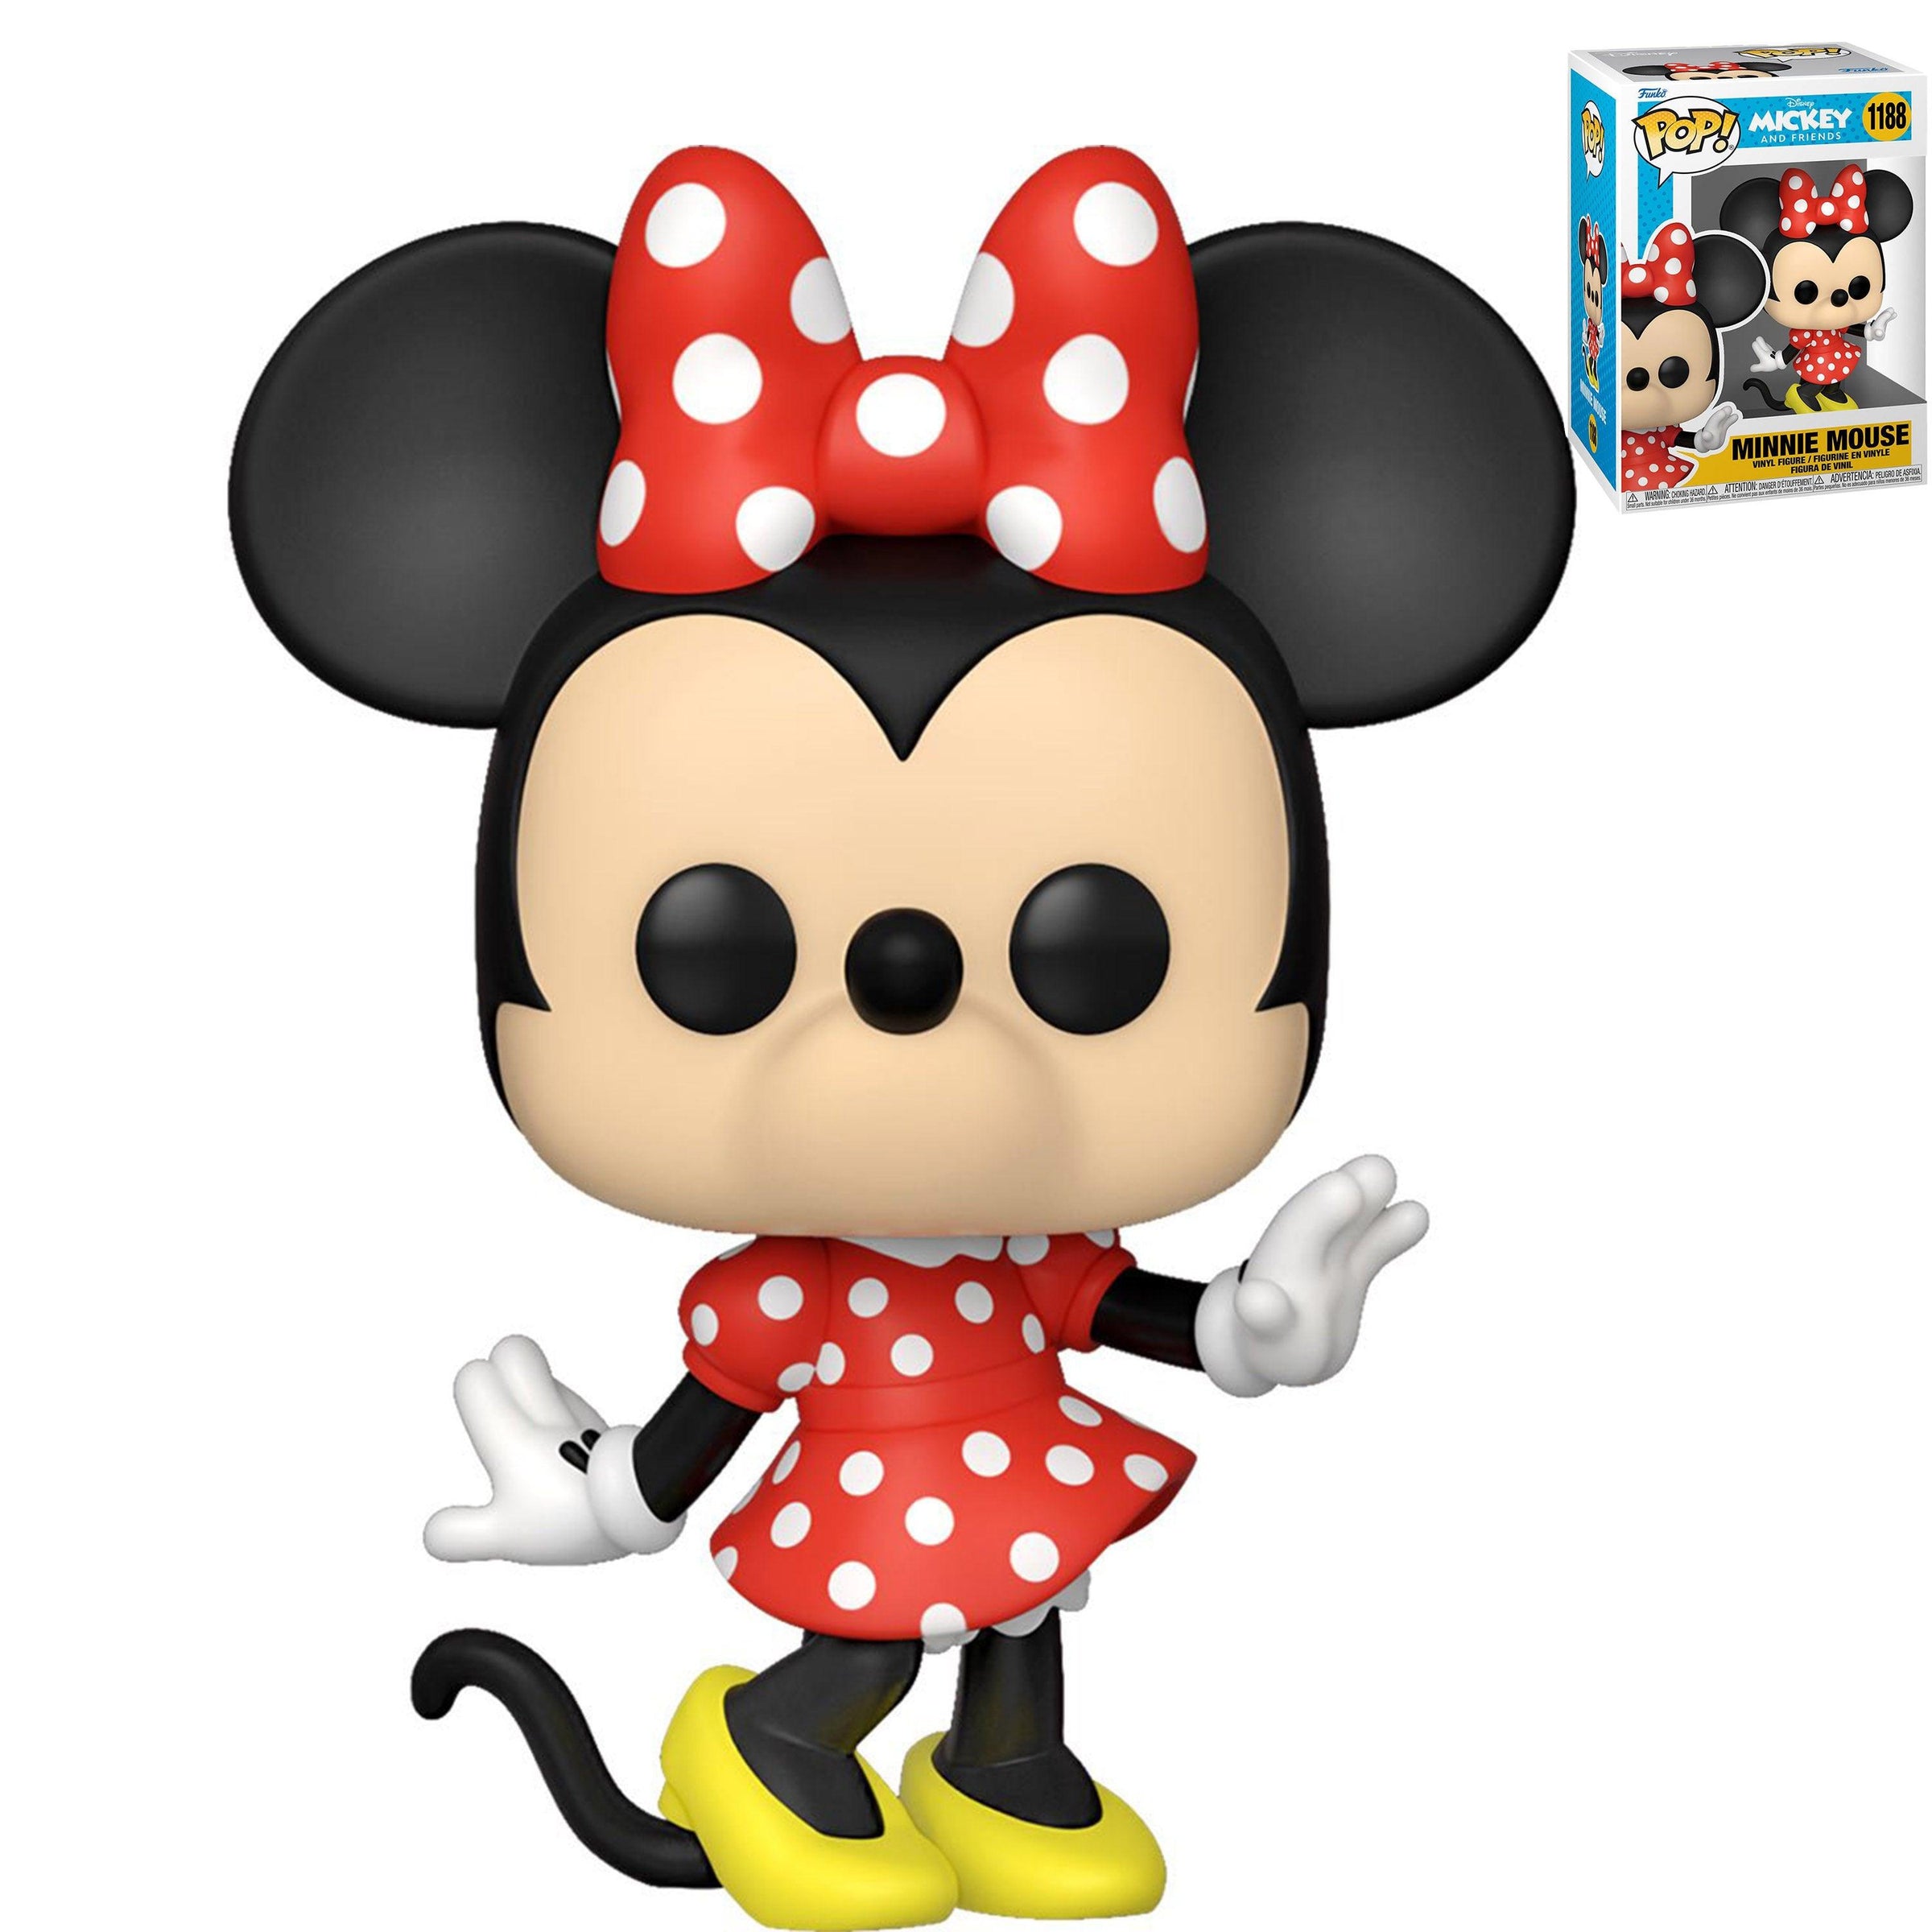 Funko Pop! Vinyl Disney Minnie Mouse Figure - Figura de Vinilo